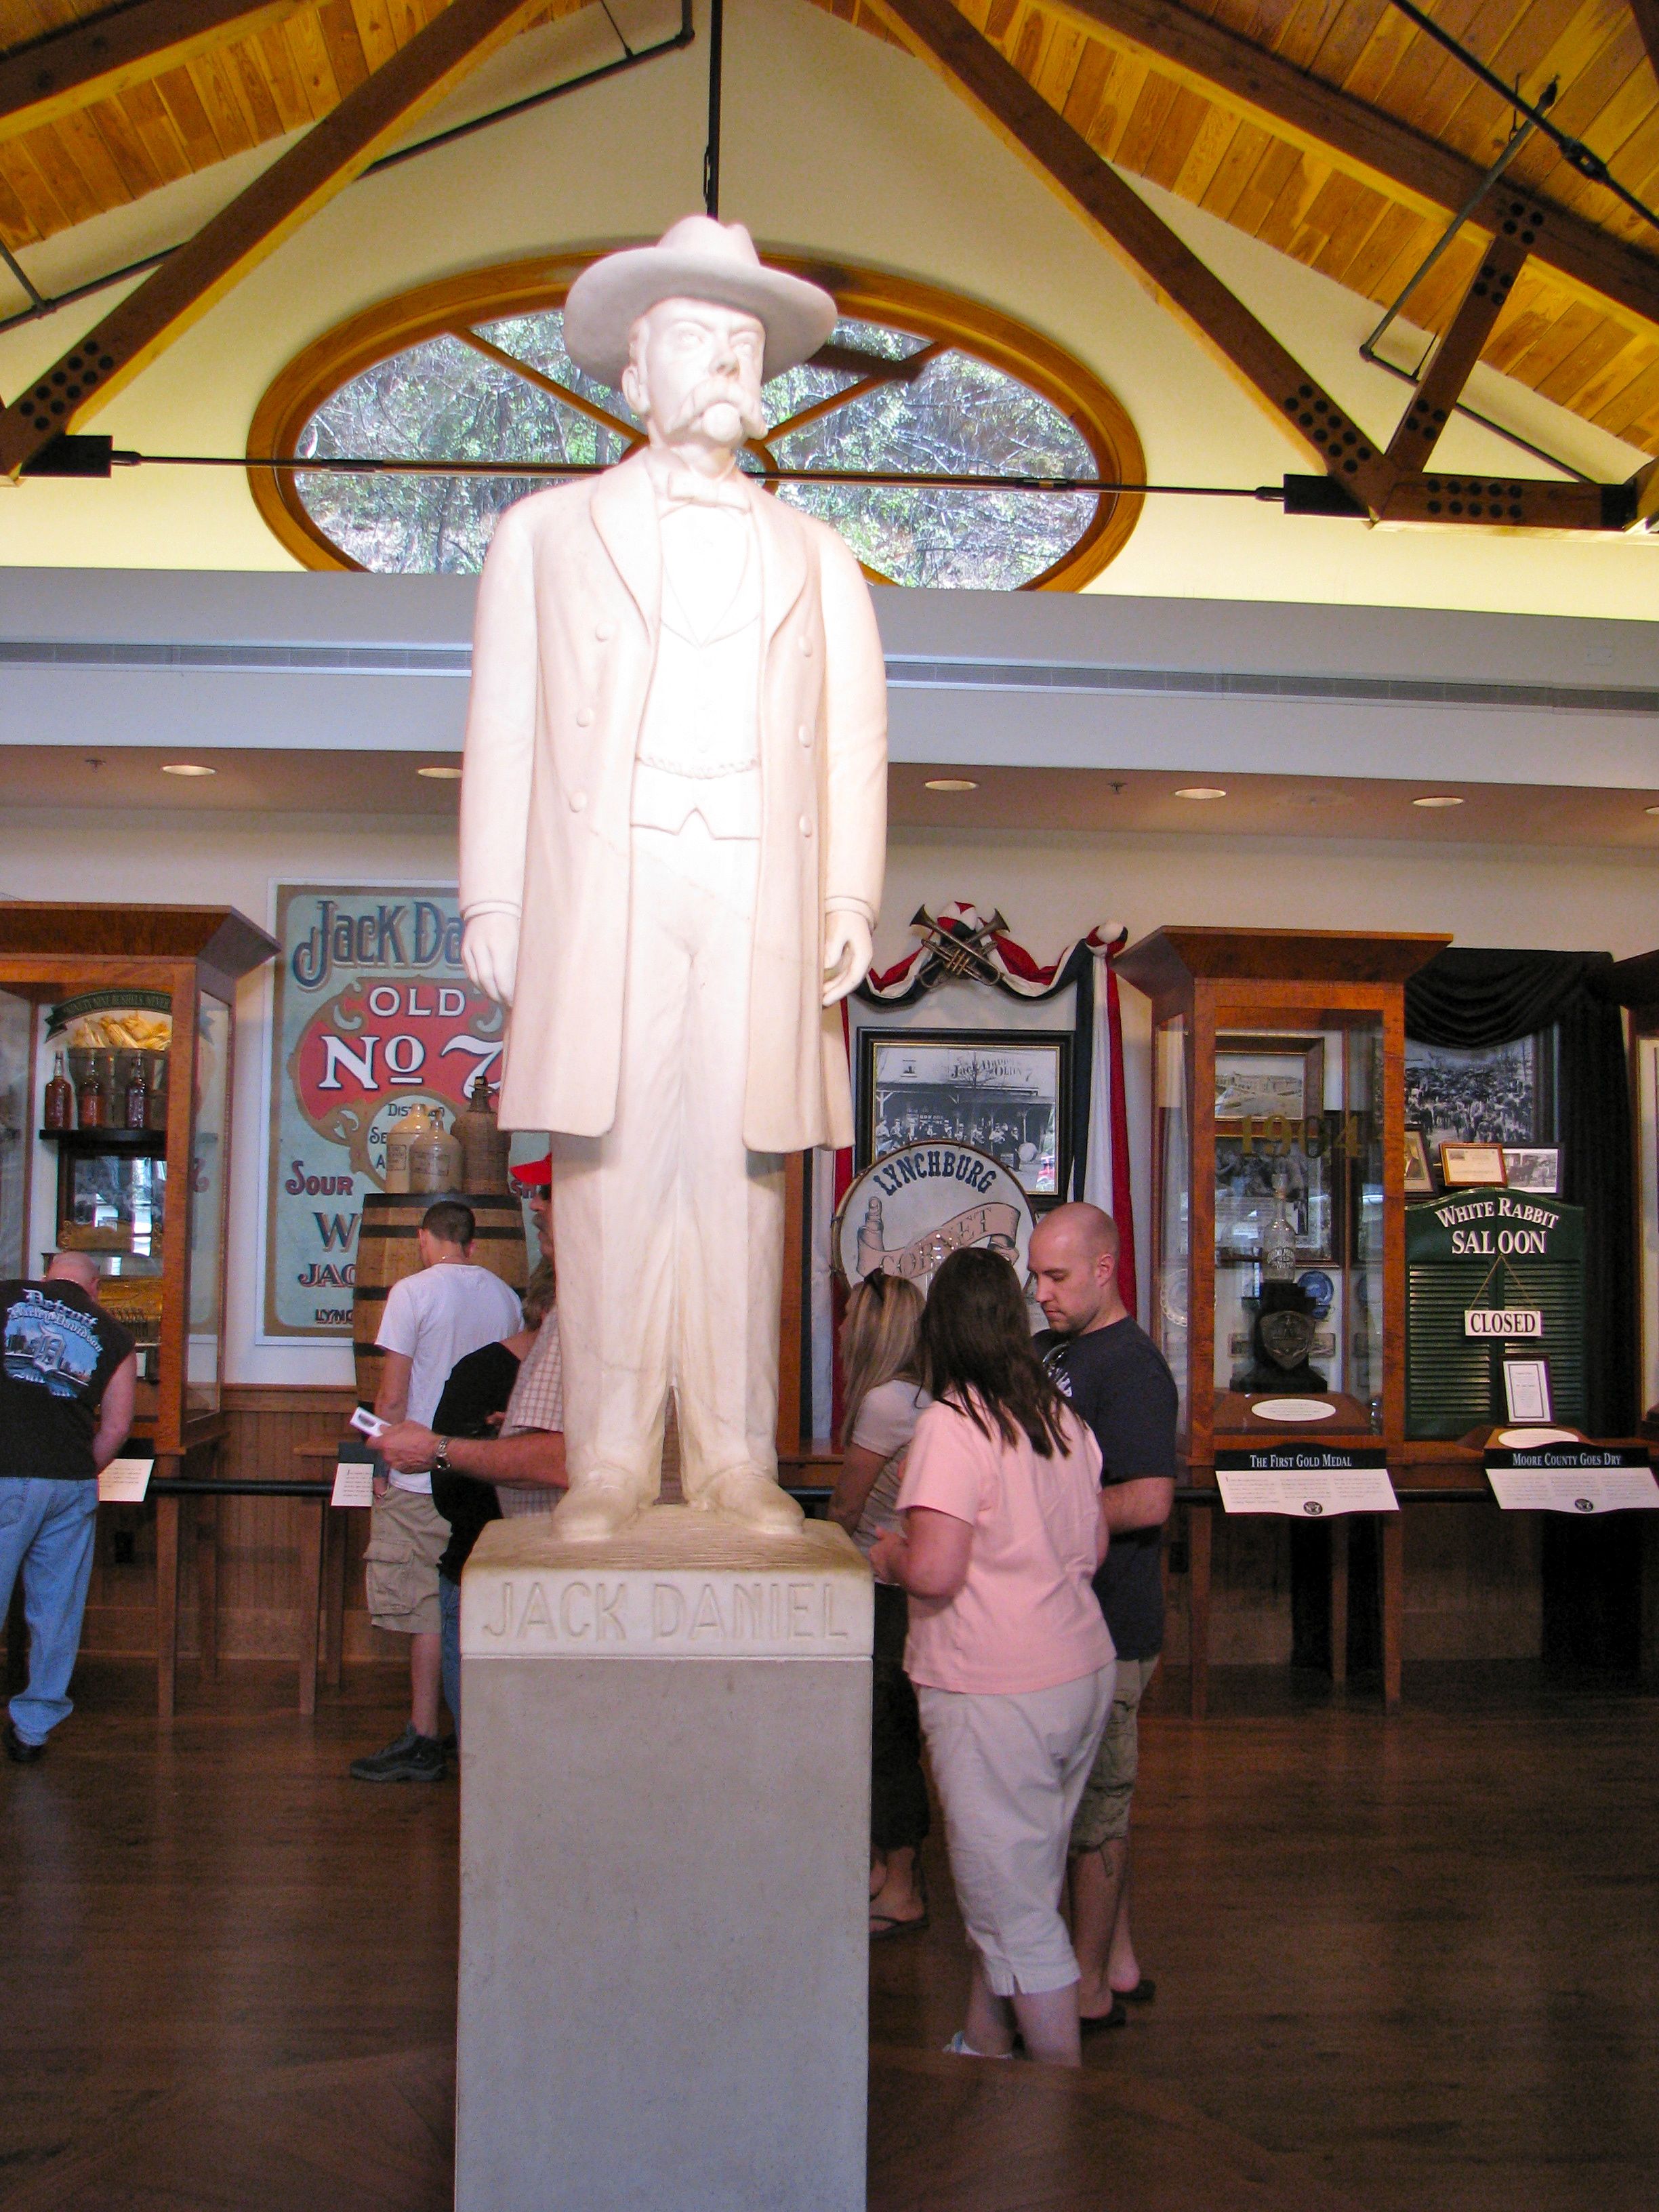 Statue of Jack Daniel